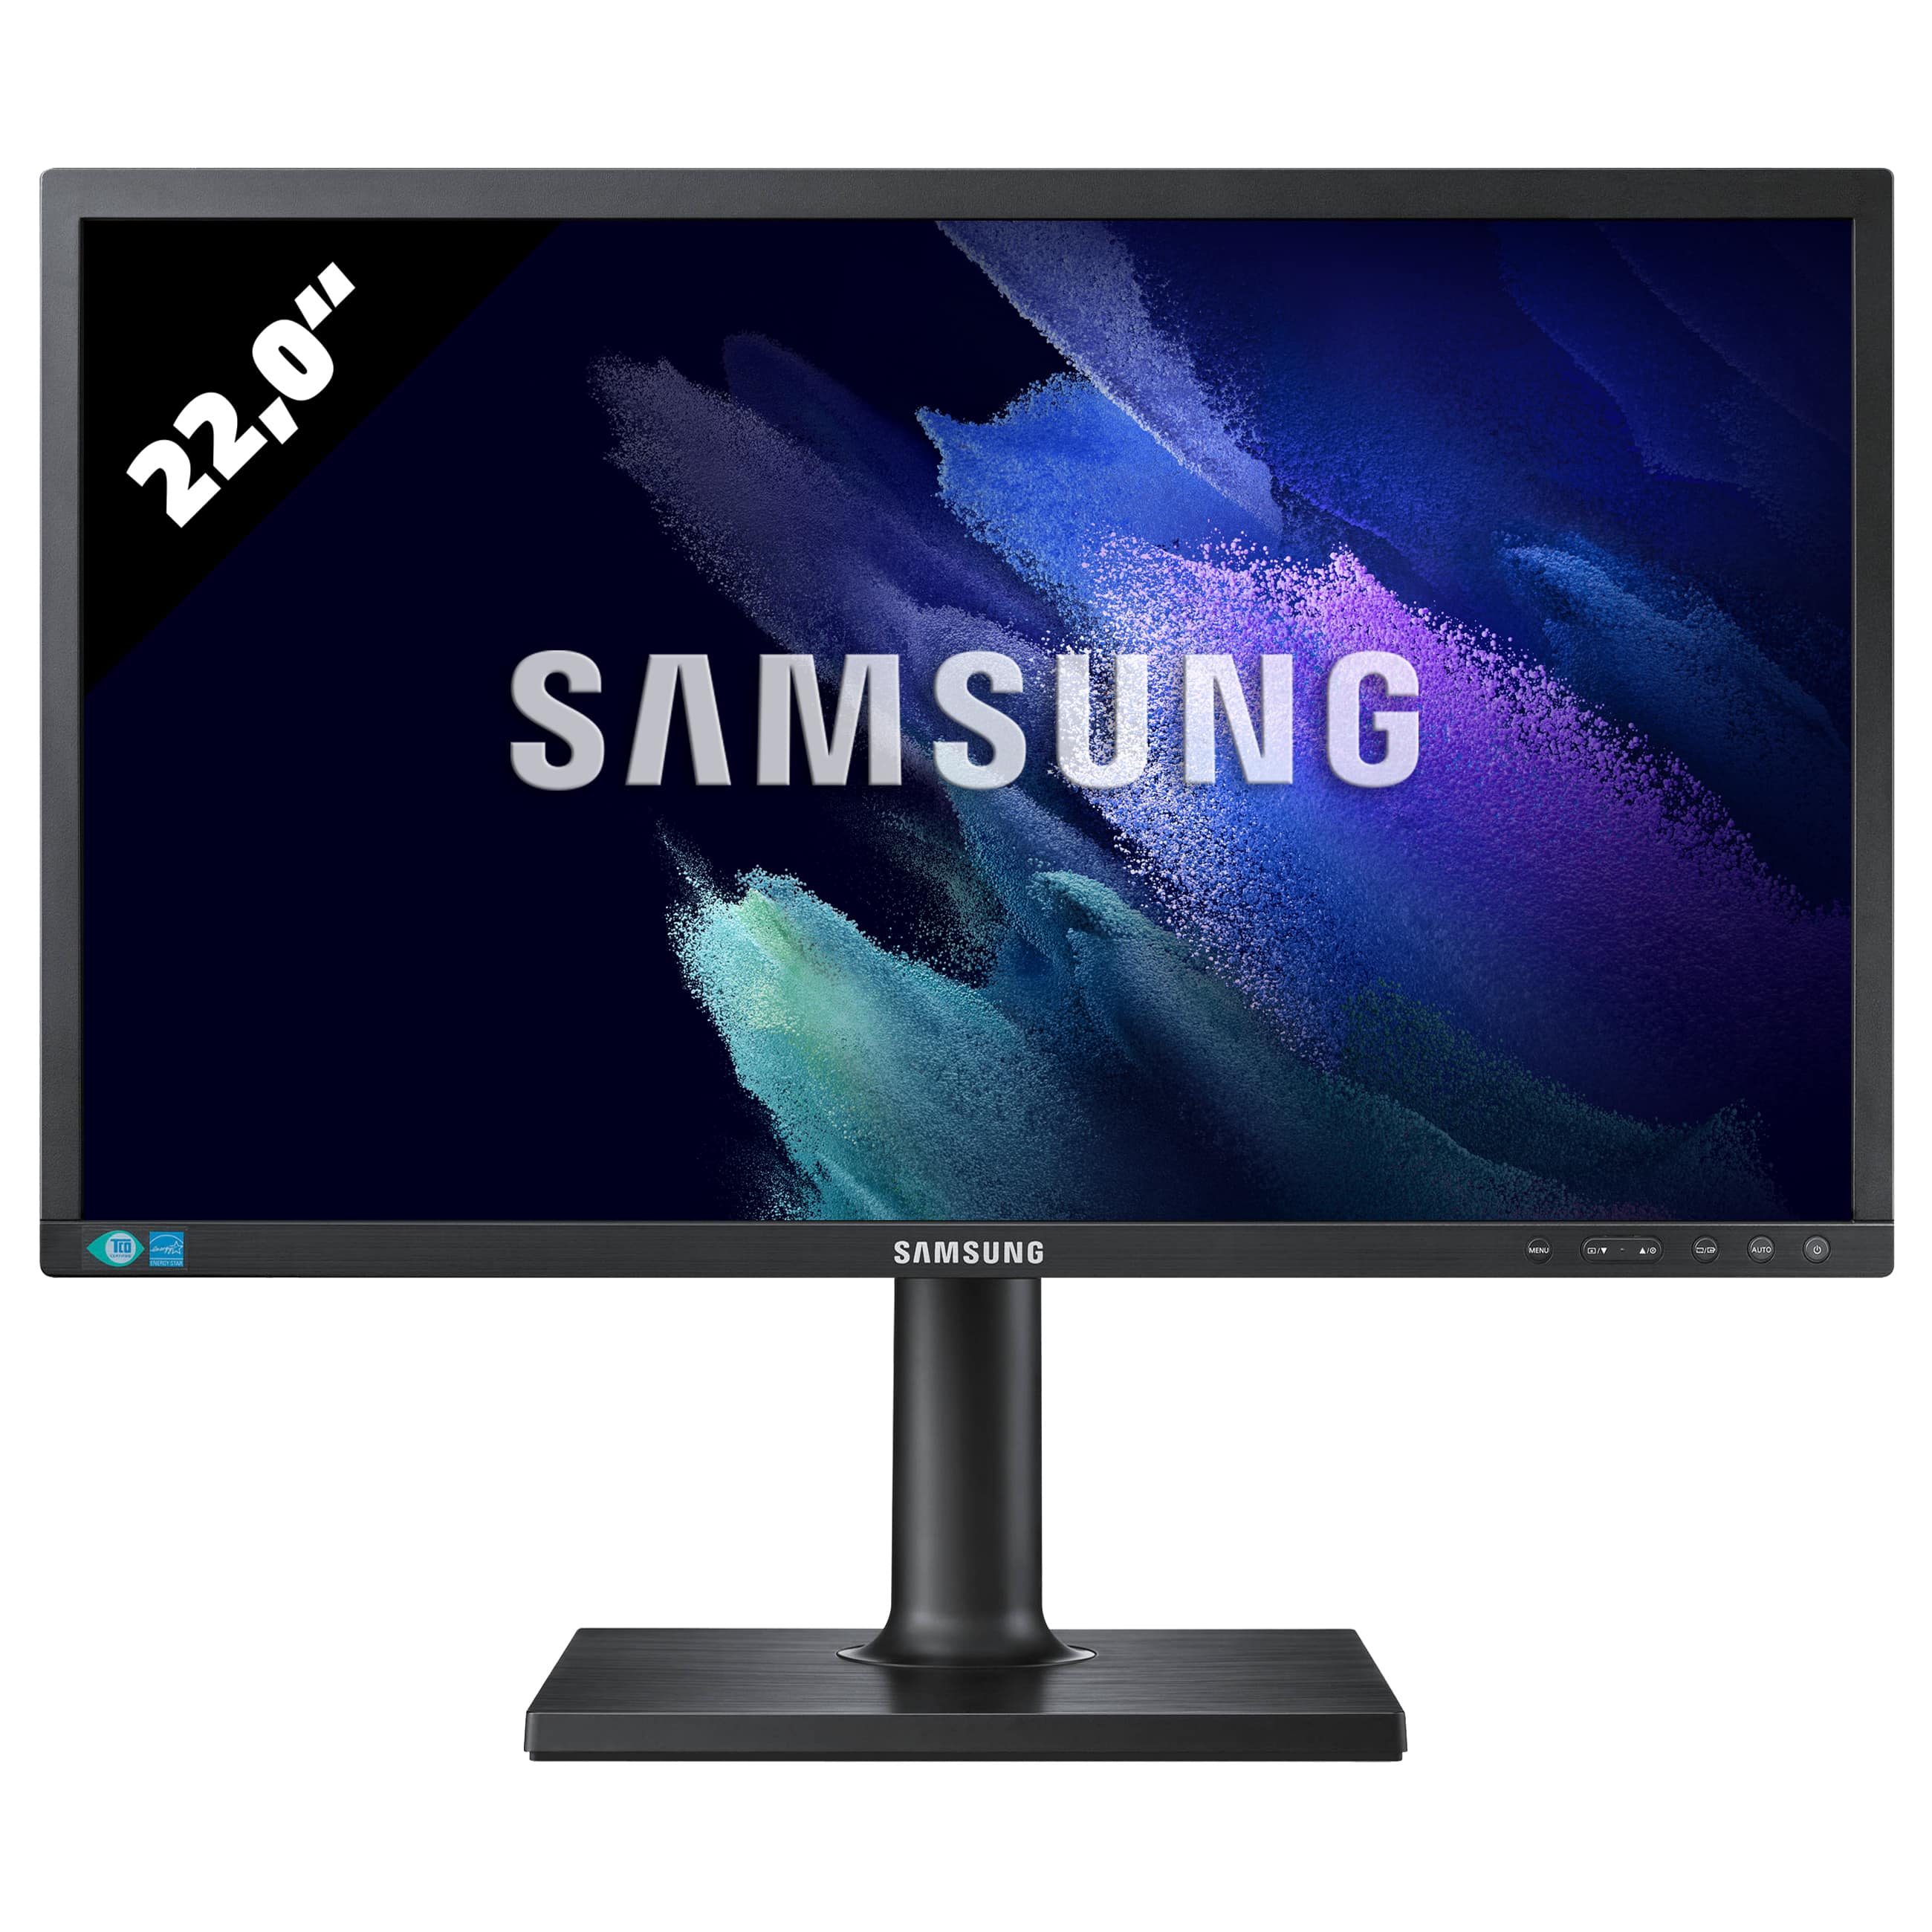 Samsung Color Display Unit S22C450MW - 1680 x 1050 - WSXGA+